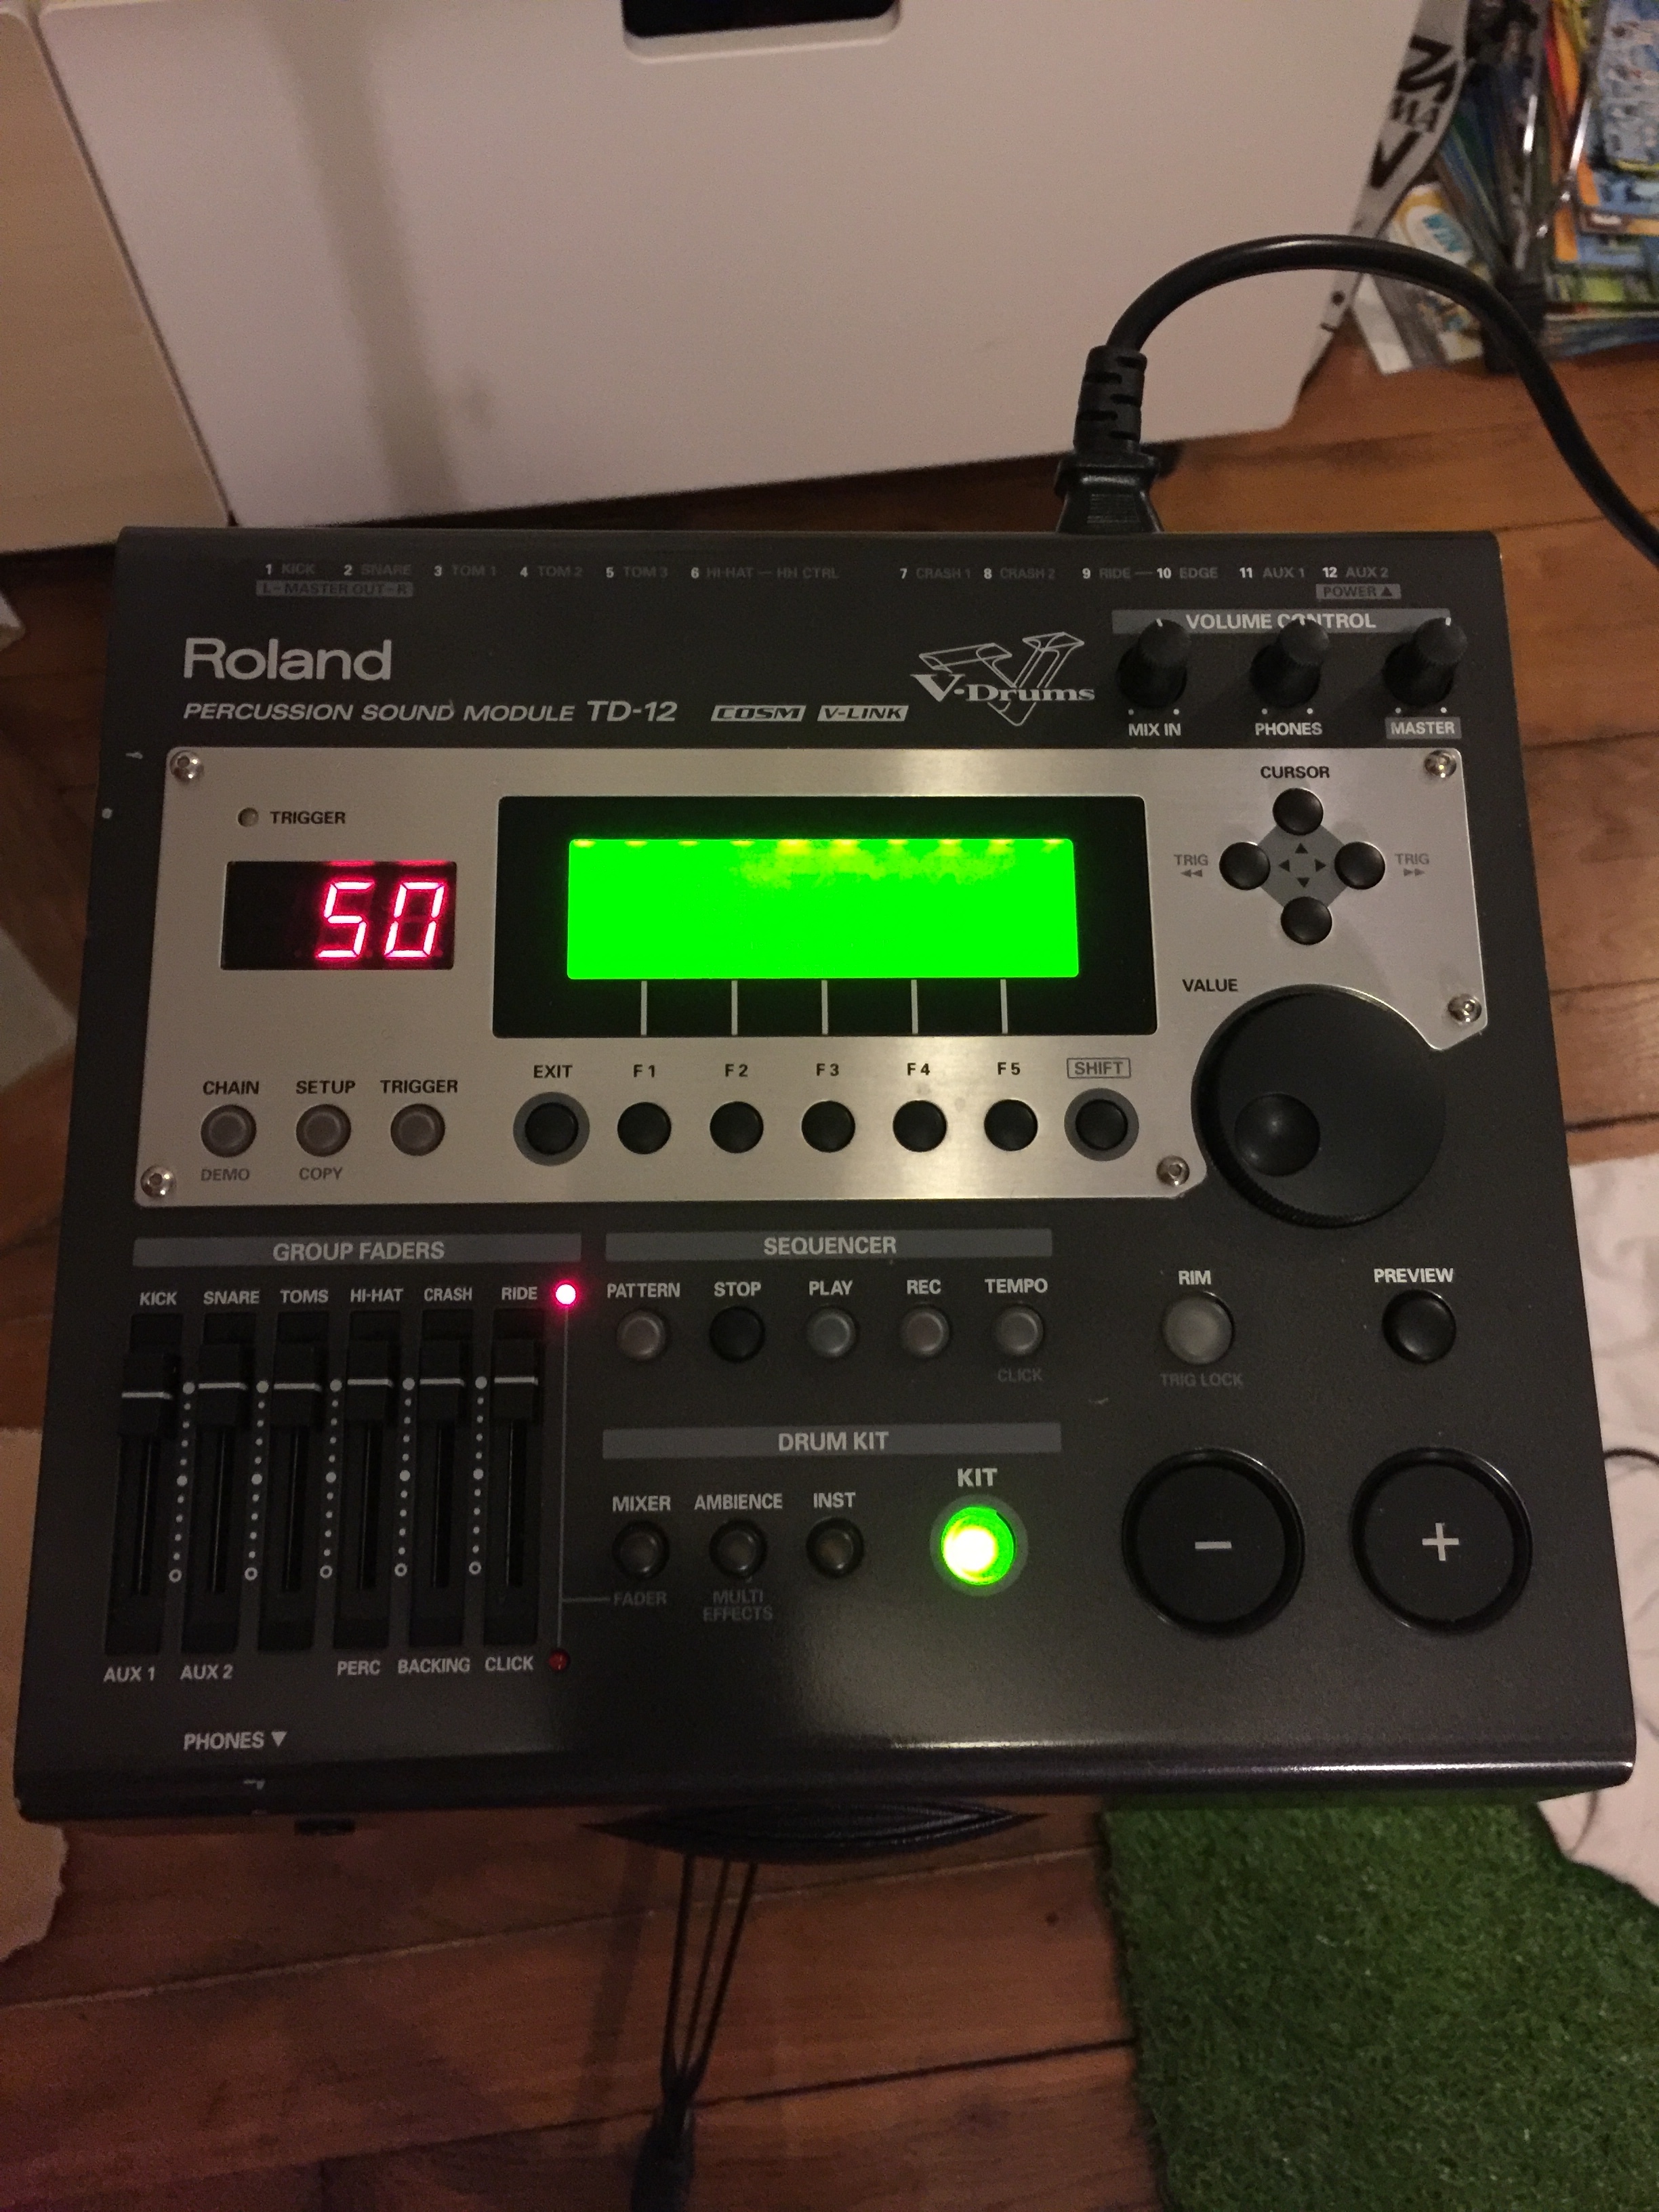 Roland TD-12 Module image (#1680172) - Audiofanzine